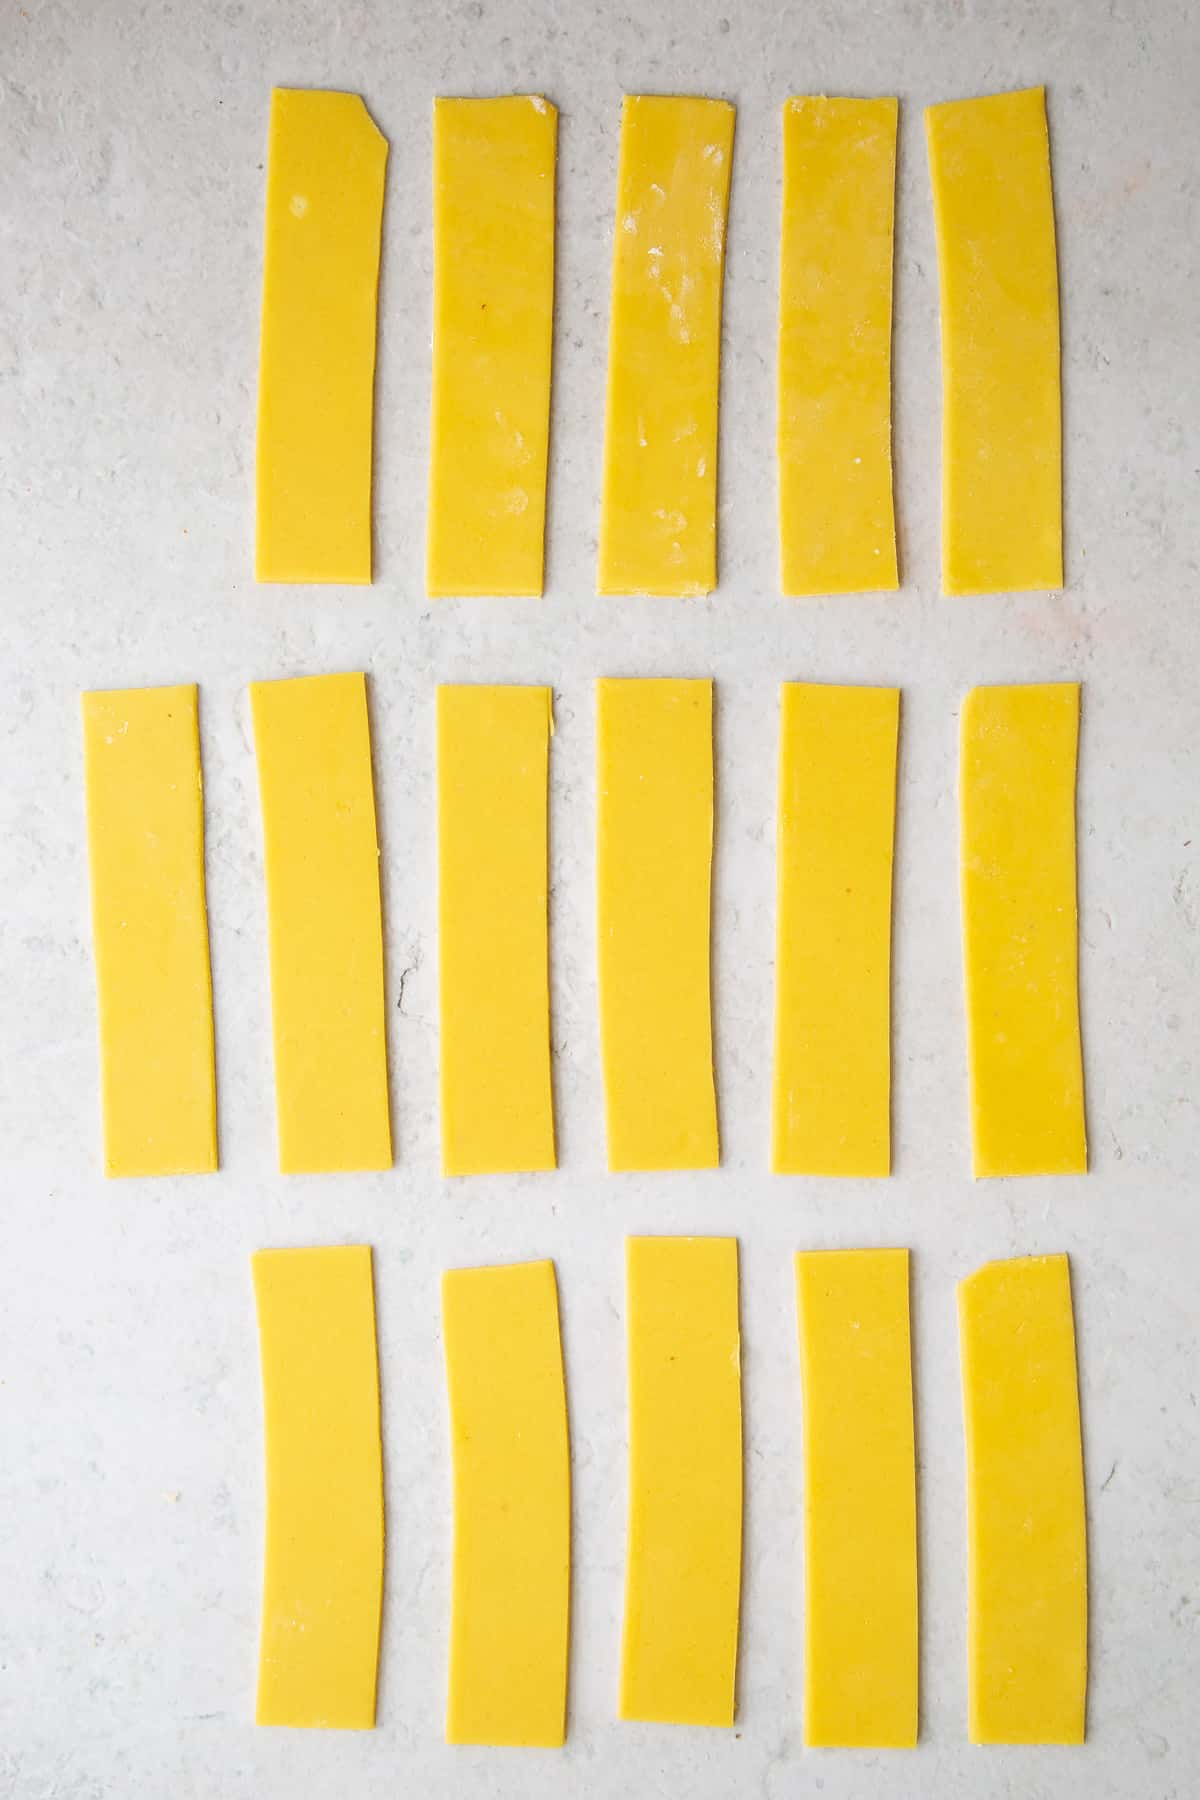 Marzipan cut into 16 strips.